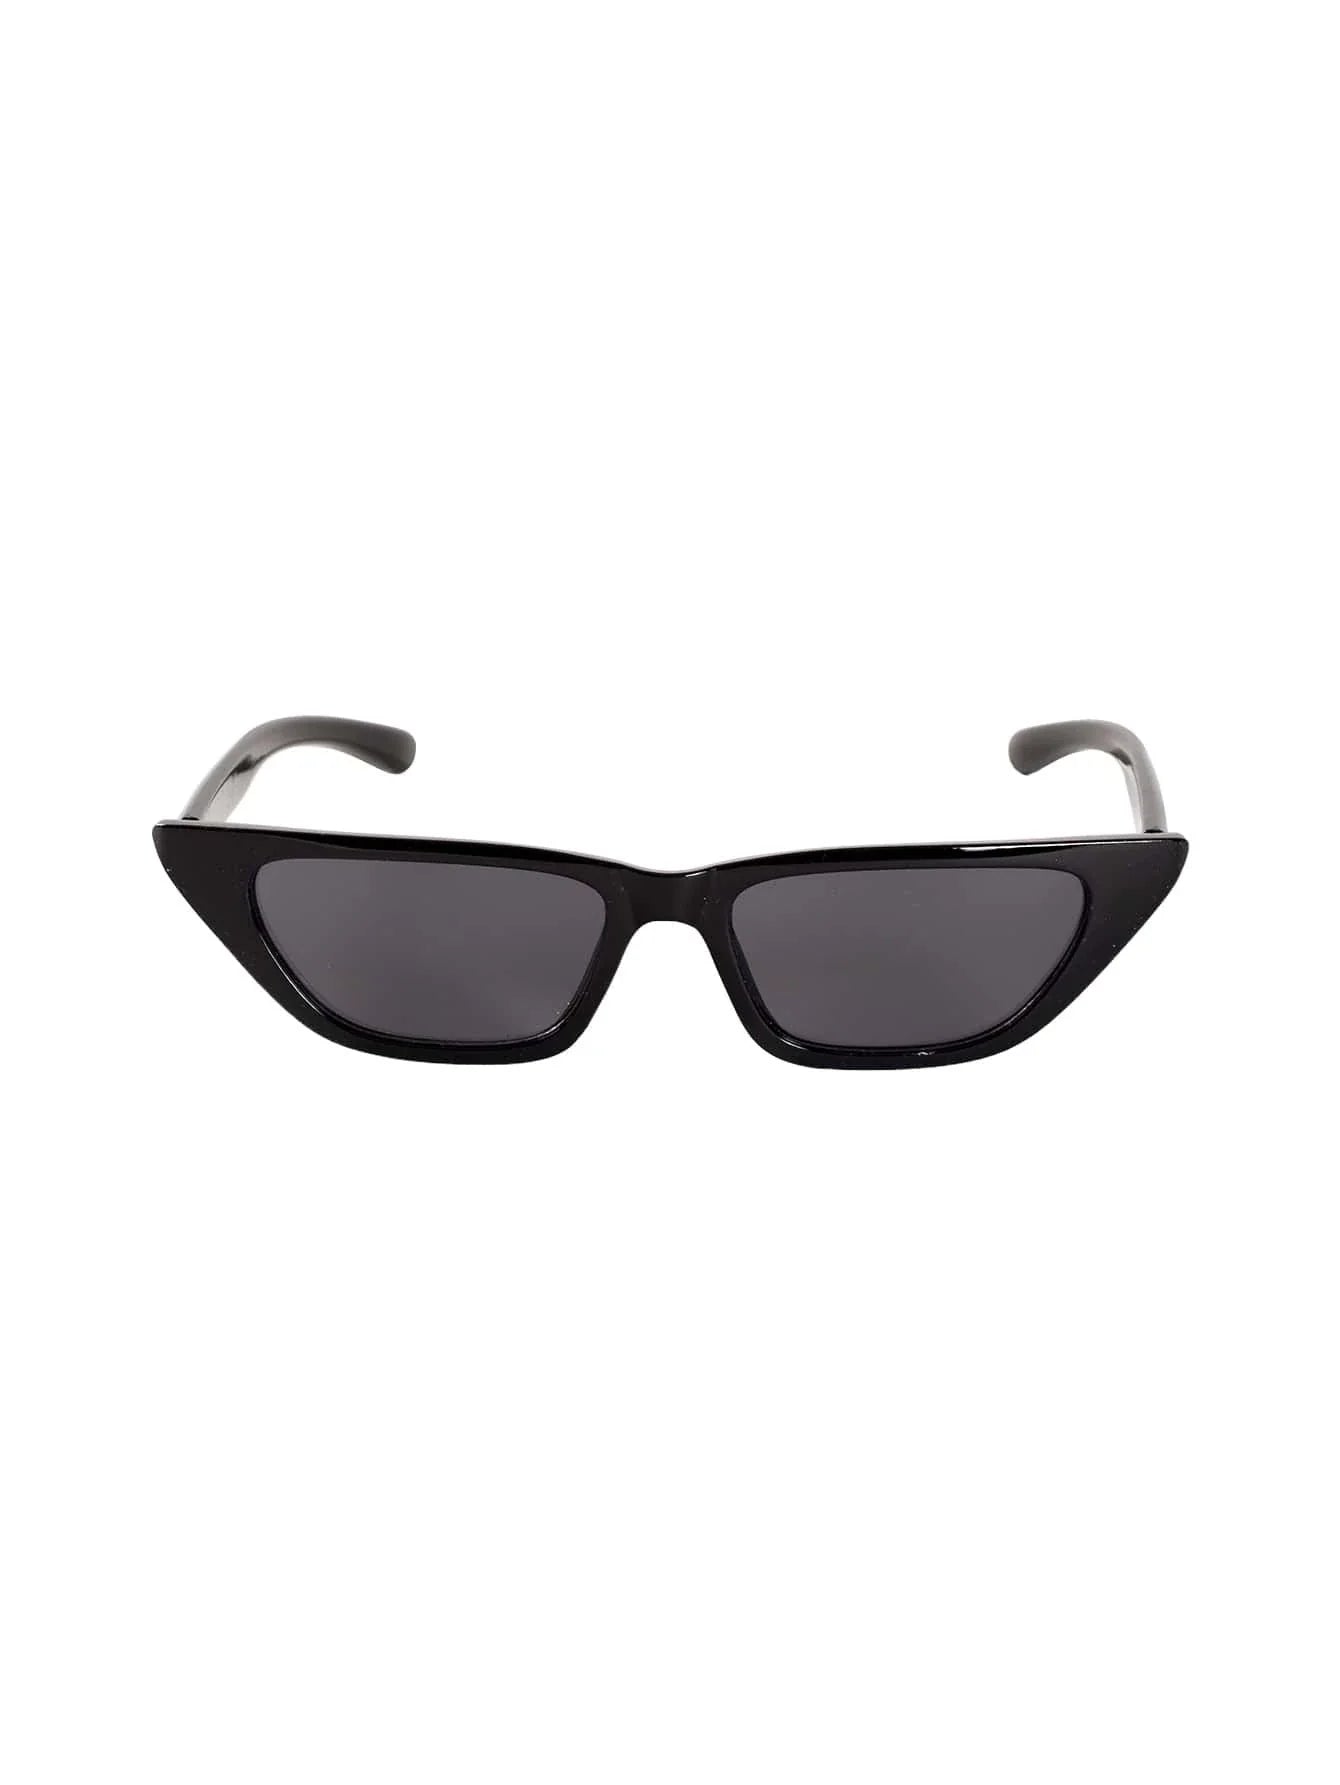 Buy Shein Minimalist Sunglasses in Pakistan